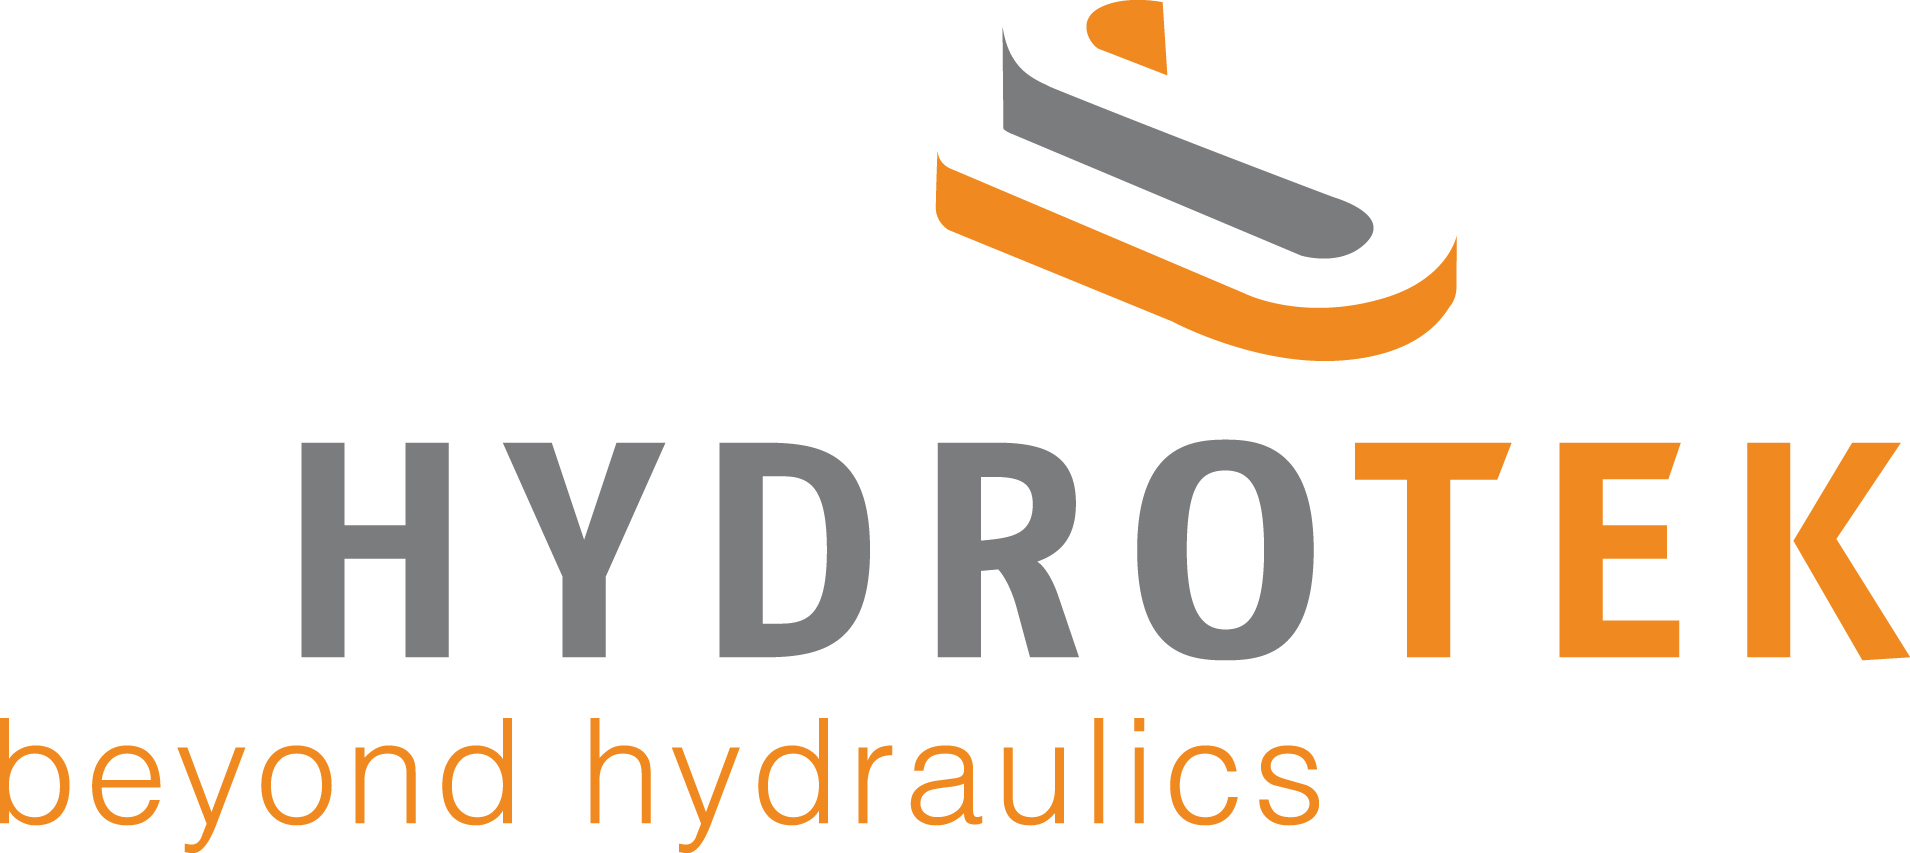 Hydrotek, beyond hydraulics